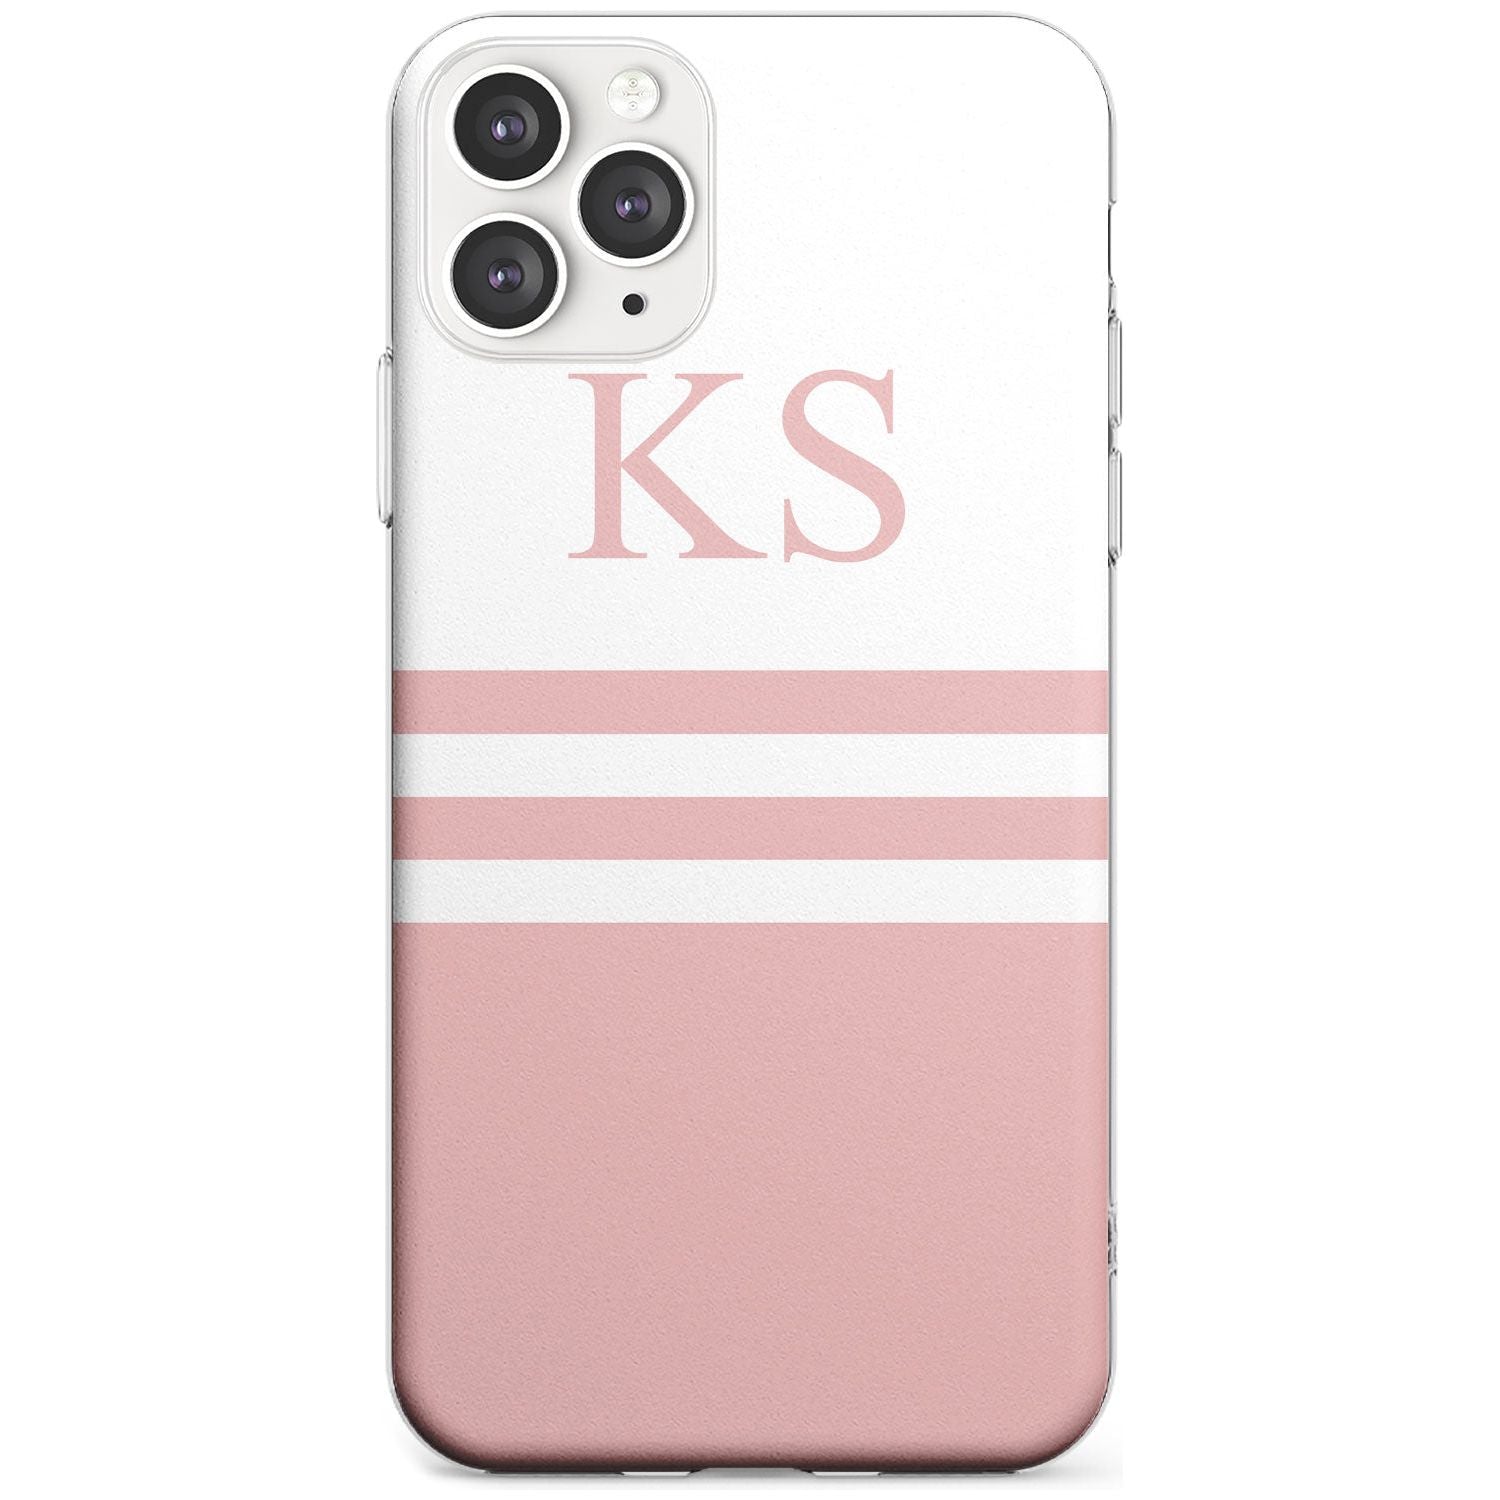 Minimal Pink Stripes & Initials iPhone Case  Slim Case Custom Phone Case - Case Warehouse